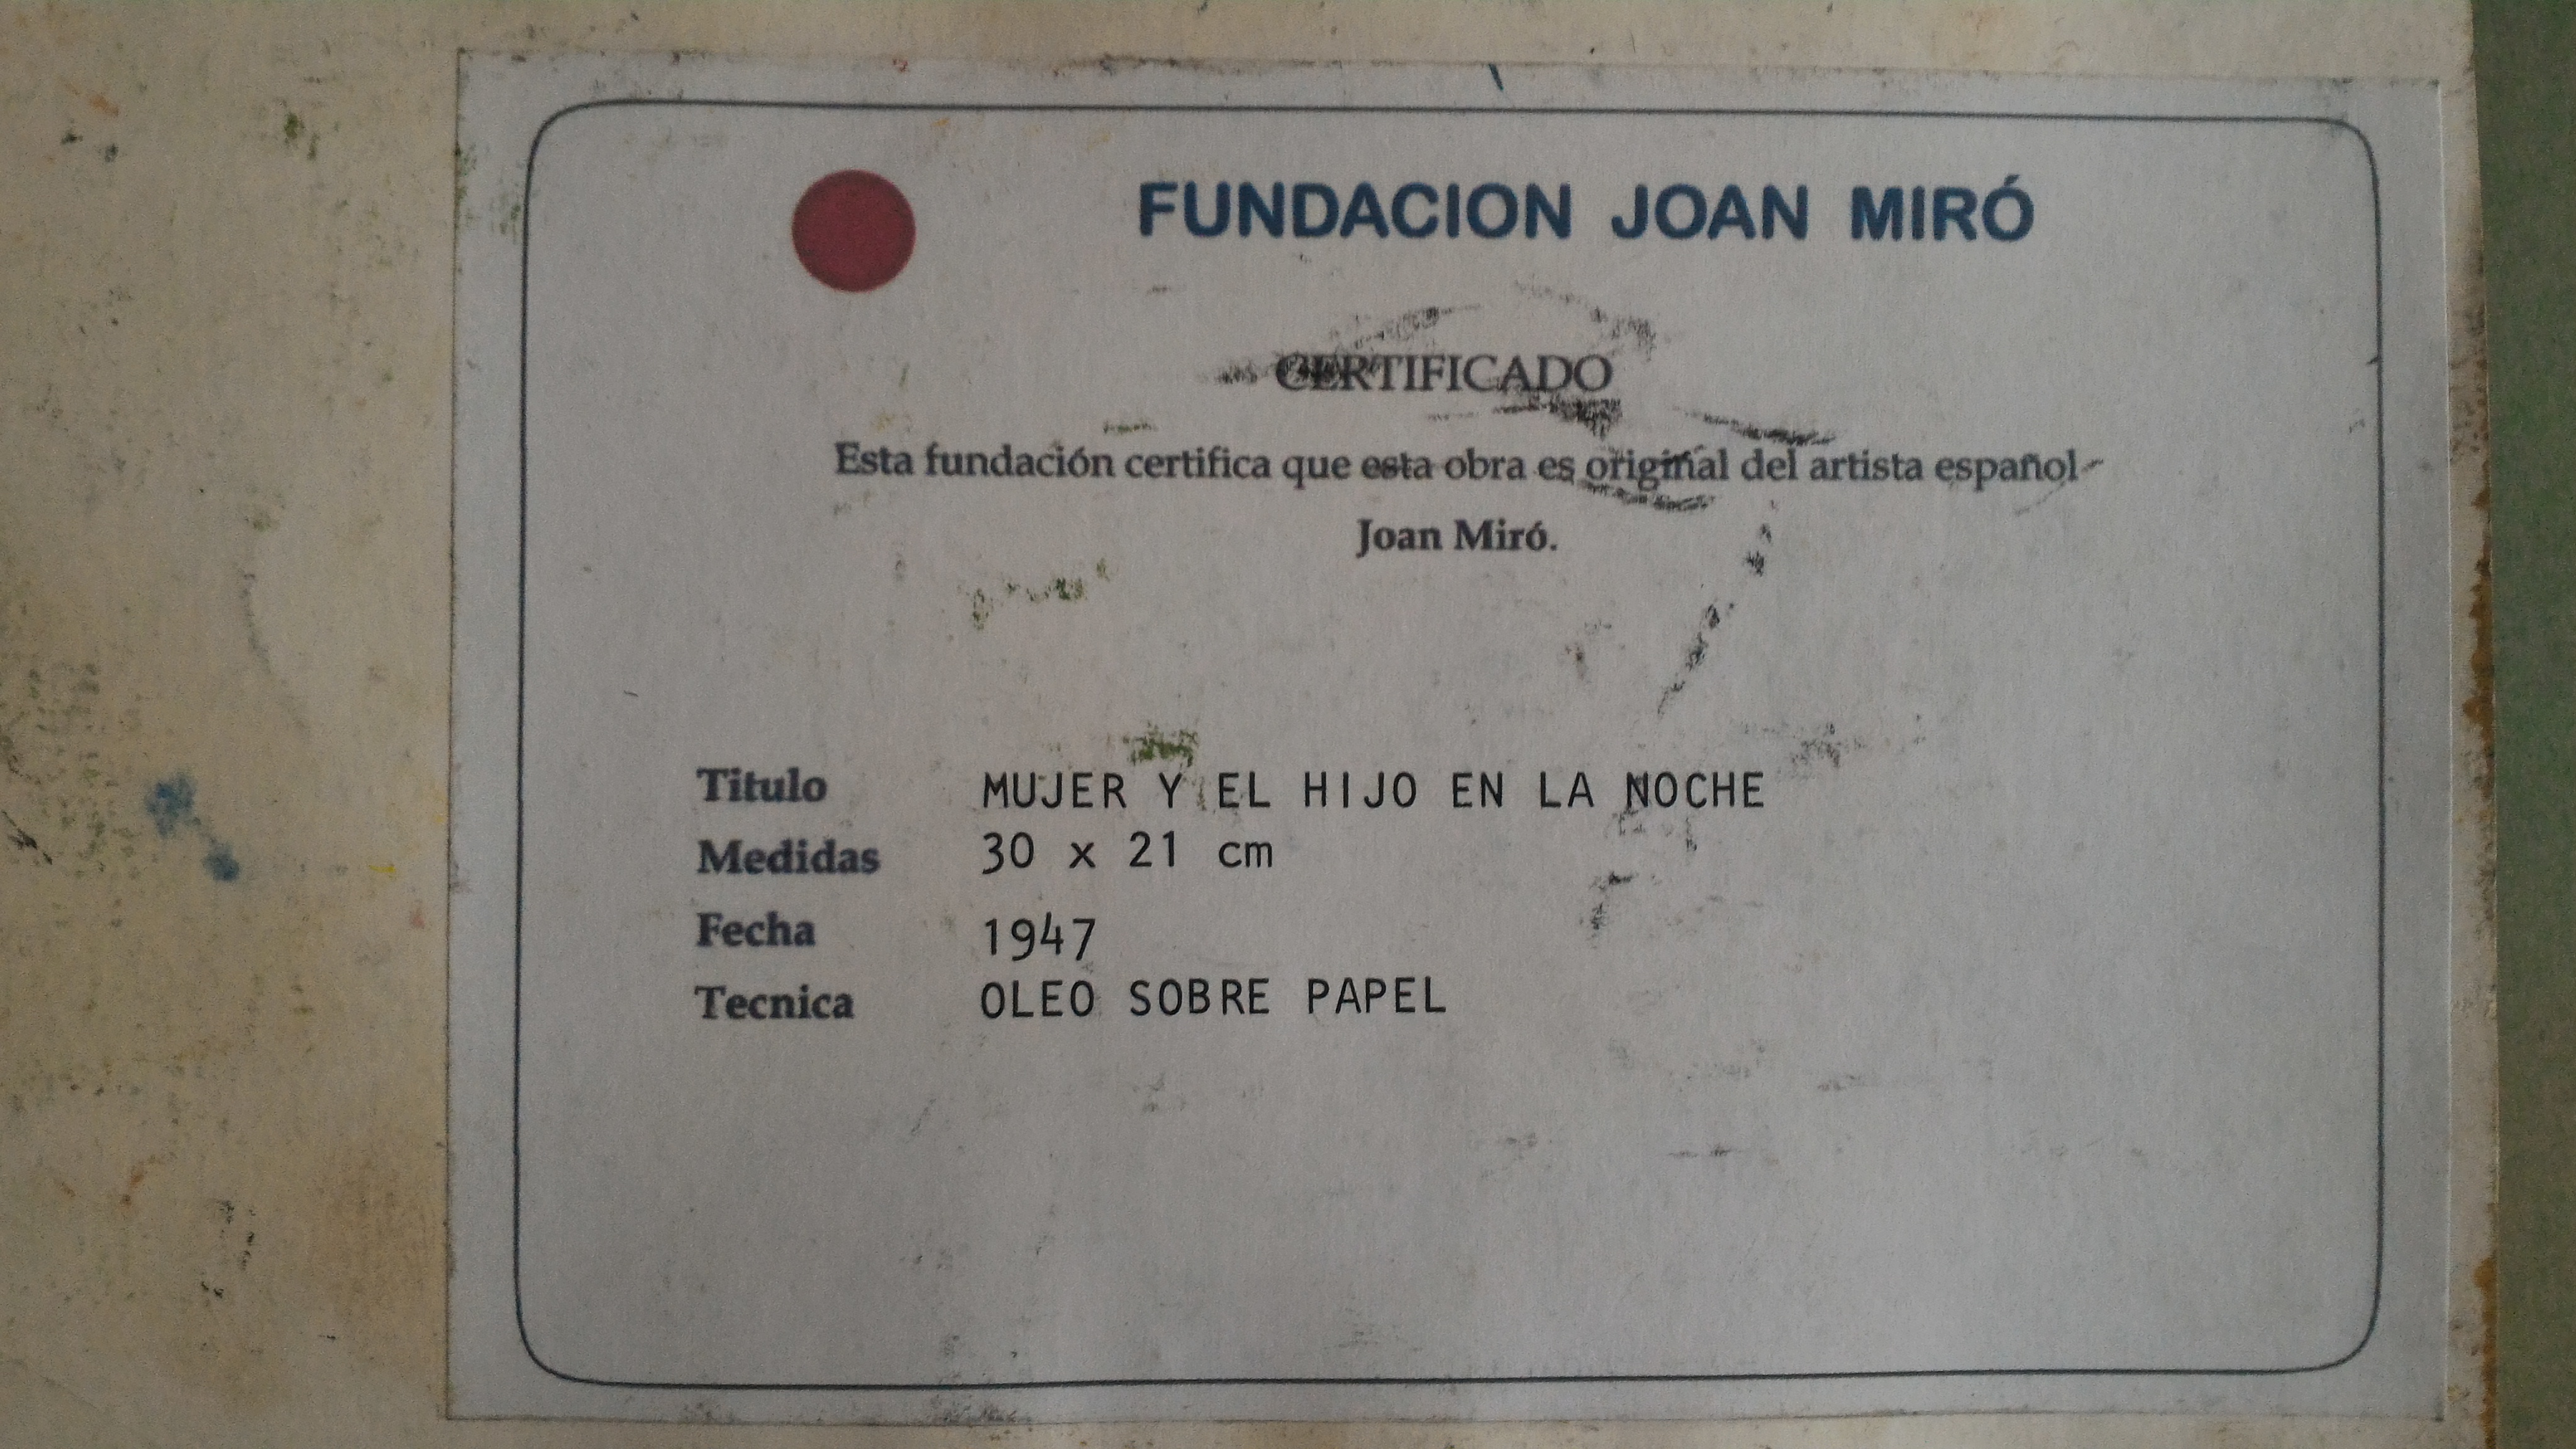 Oil on paper abstract signed Miro - dated 1947 & Titled la mujer y el hijo en la noche. - Image 4 of 5